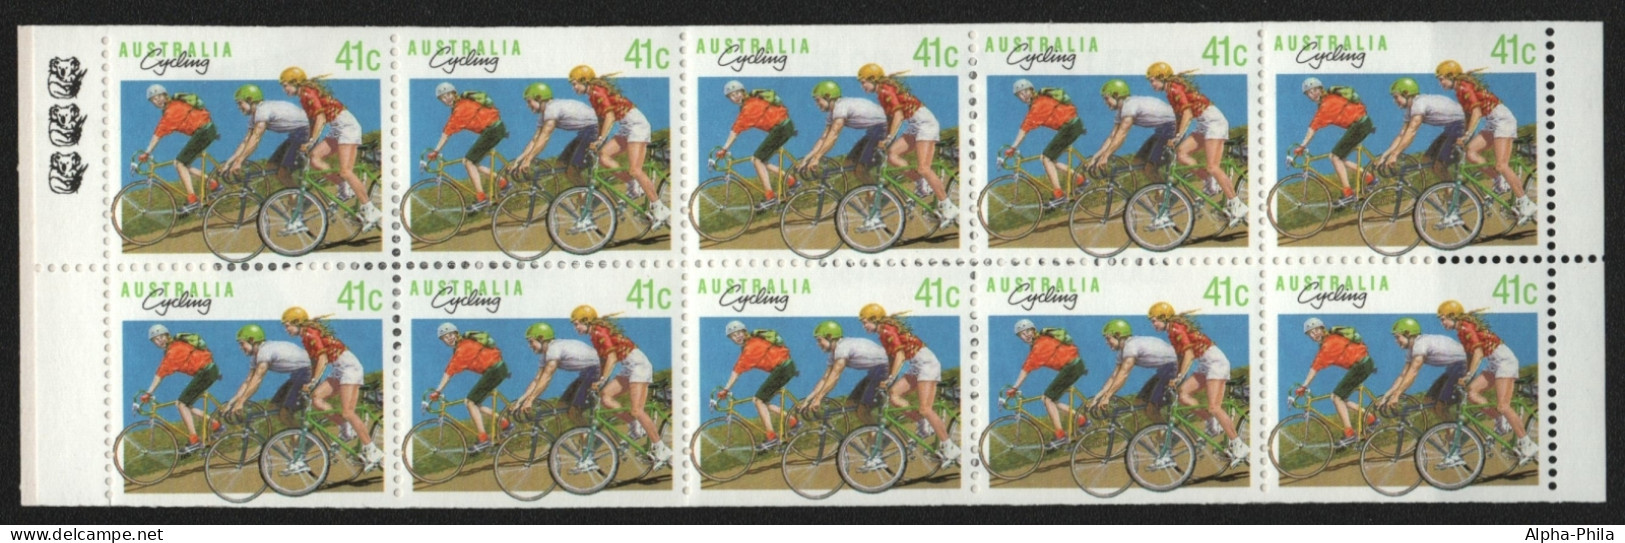 Australien 1989 - Mi-Nr. 1165 D ** - MNH - MH 0-63 - Radsport - Carnets